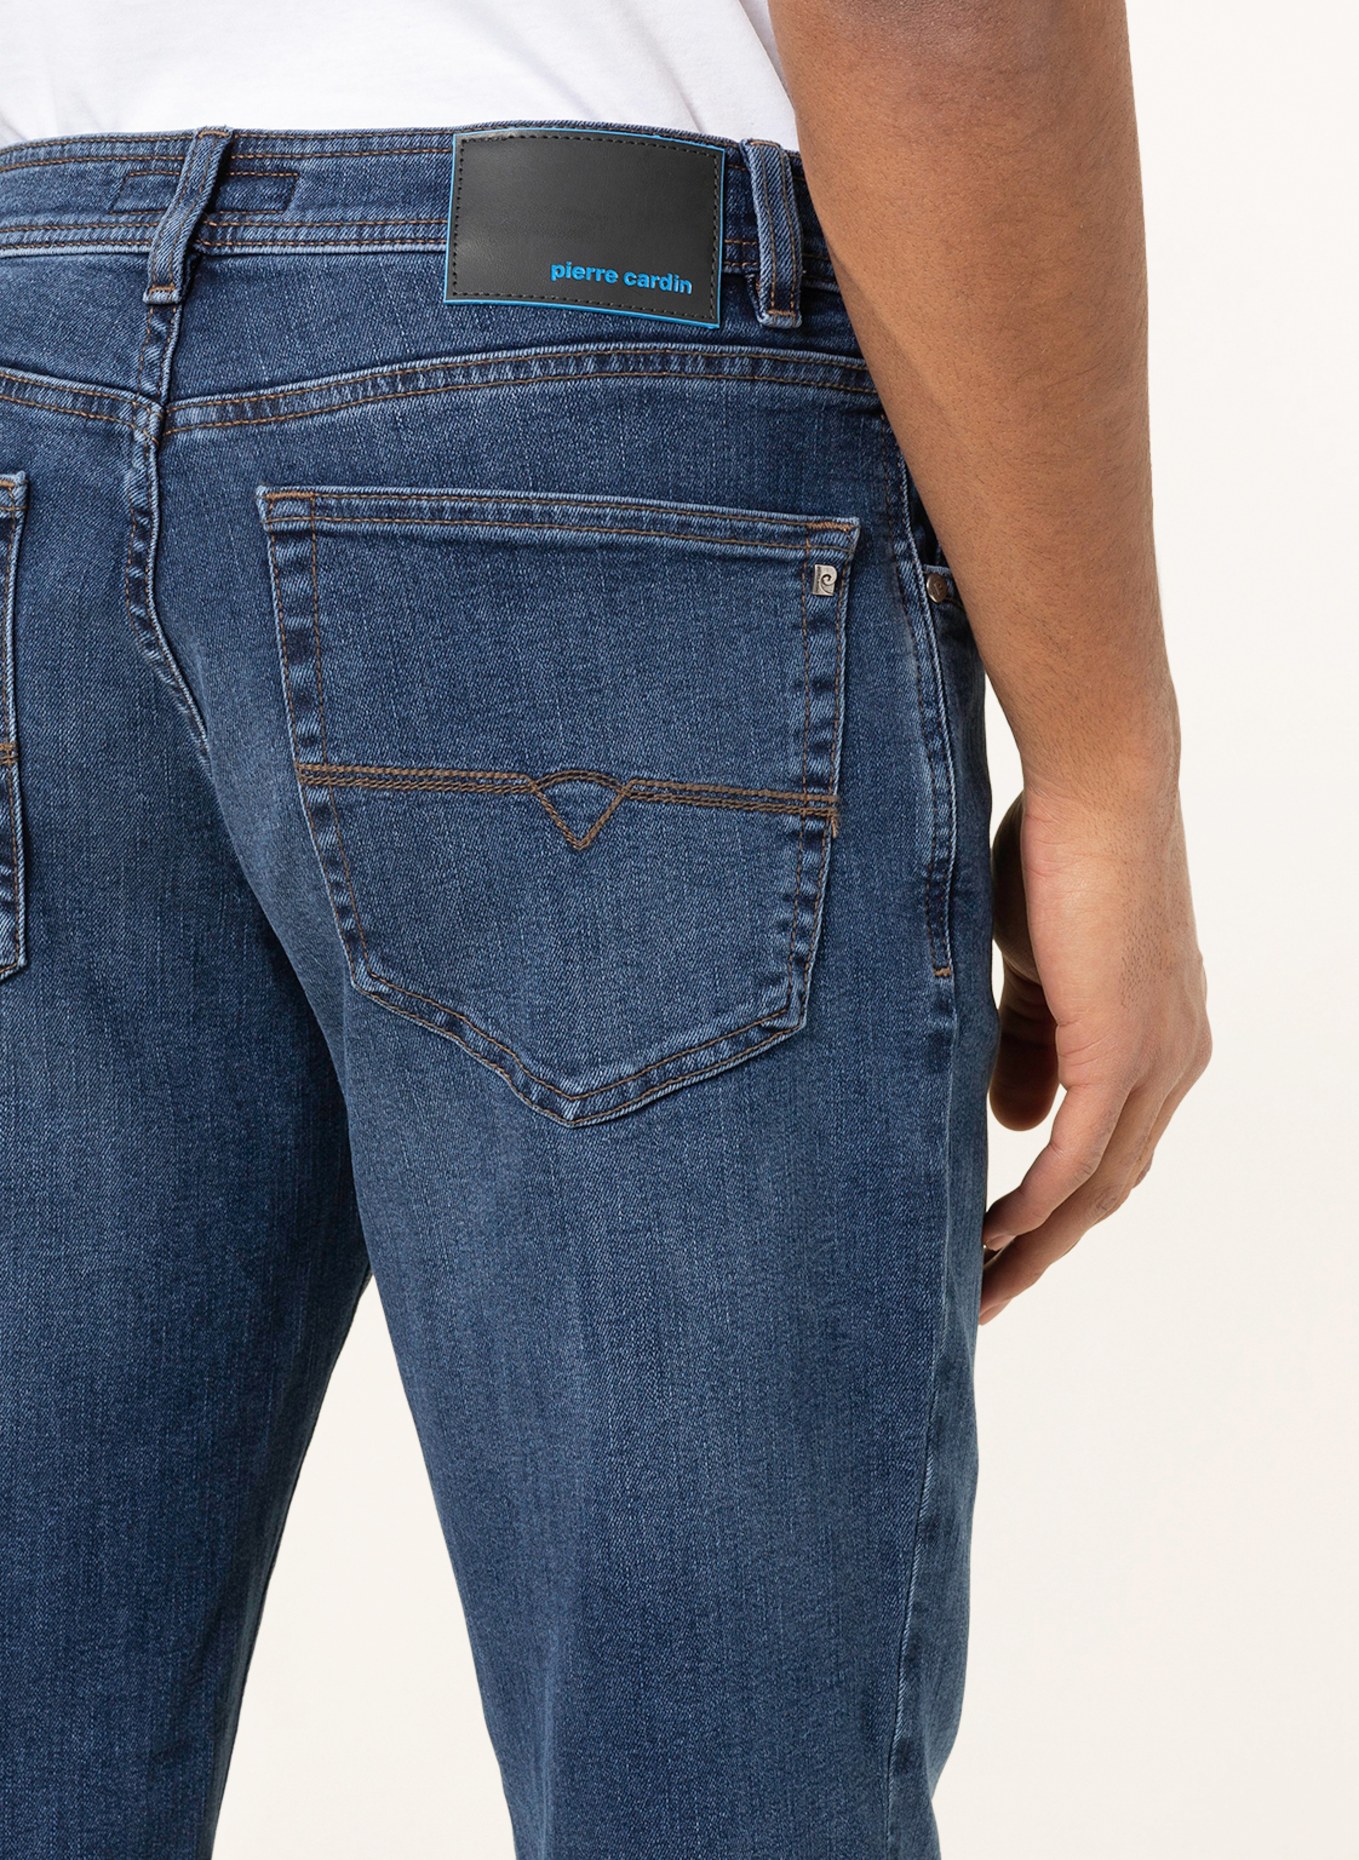 pierre cardin Jeans DIJON Comfort Fit , Farbe: 6812 dark blue used (Bild 5)